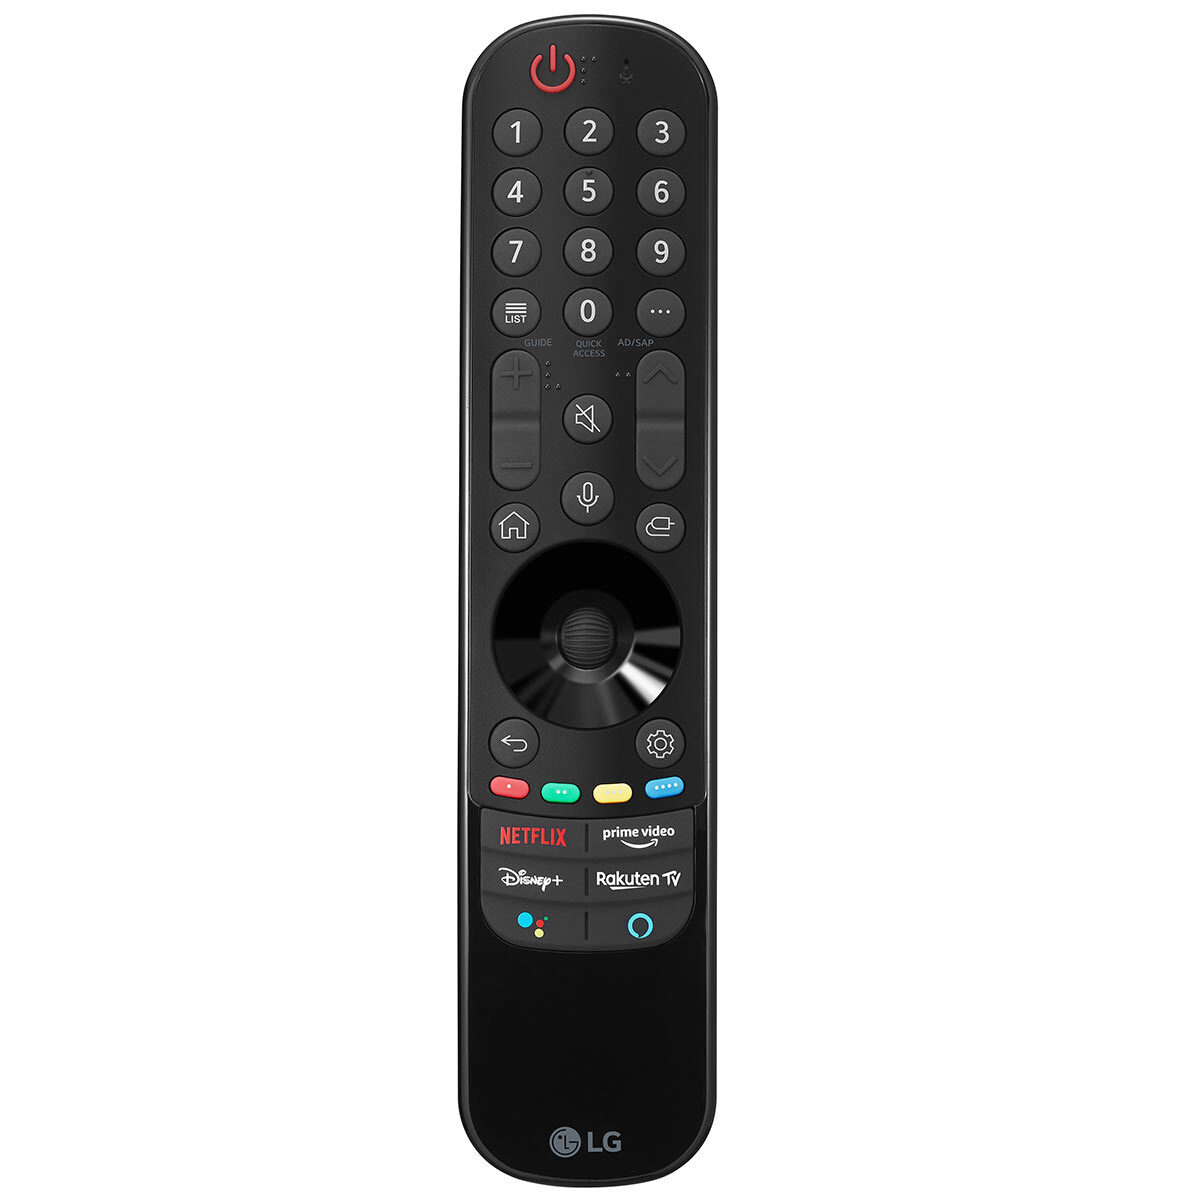 Buy LG 43UP77006LB 43 Inch 4K Ultra HD Smart TV at costco.co.uk